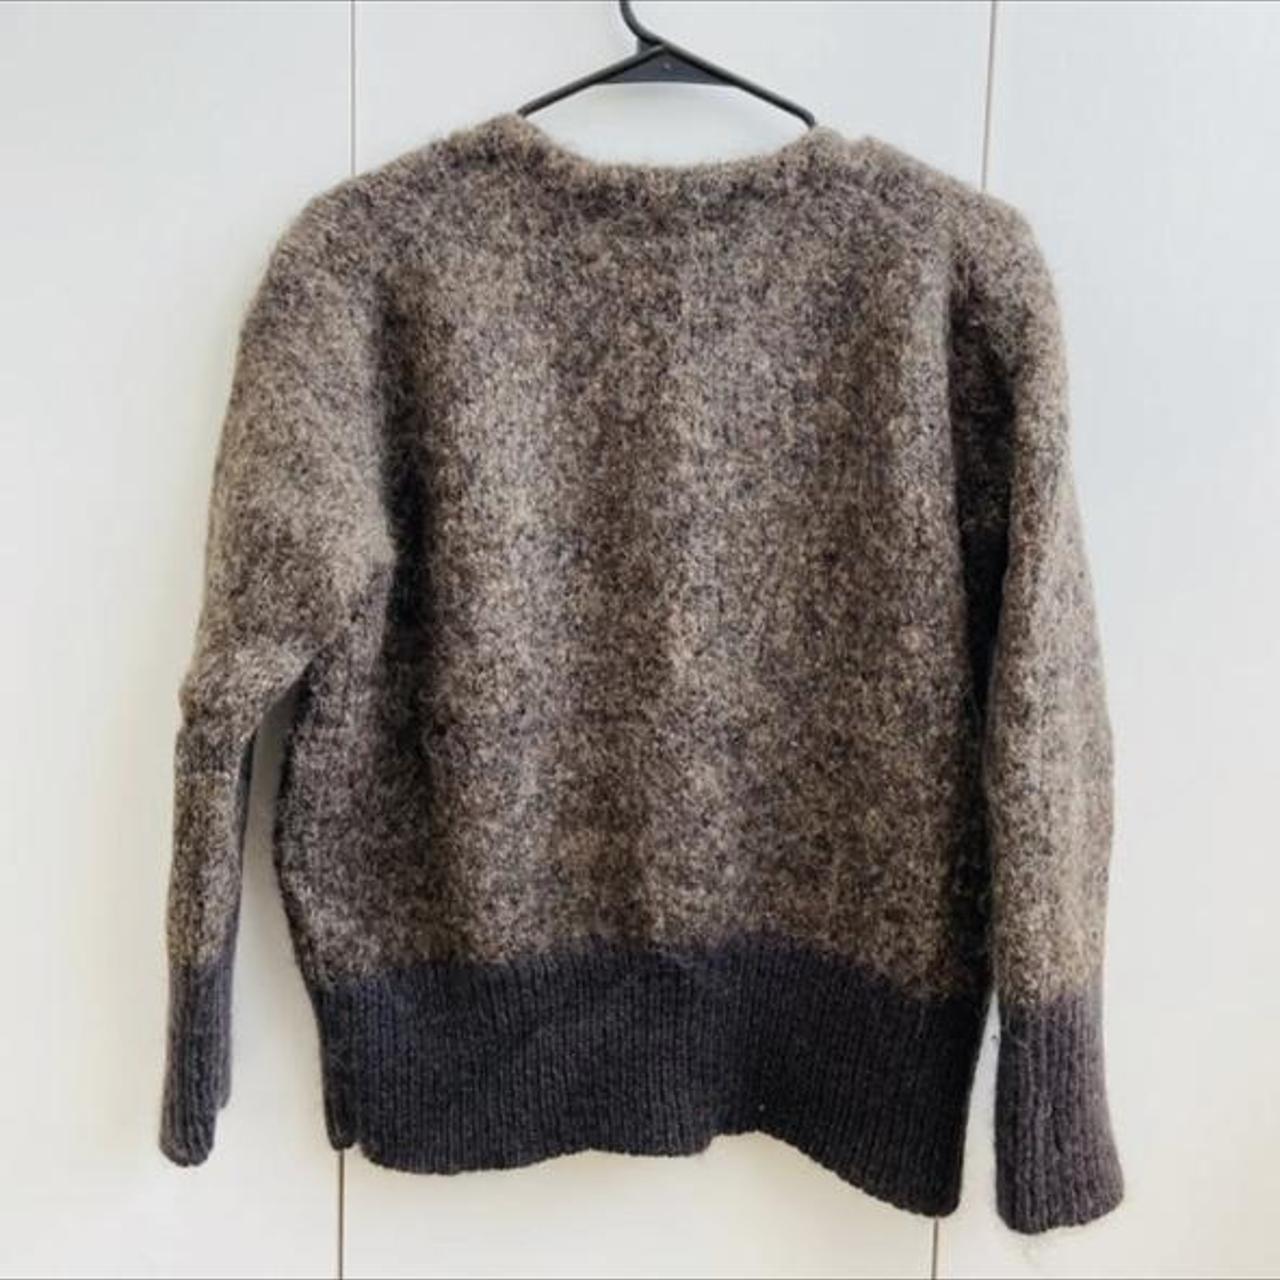 Product Image 3 - Tomorrowland Mélange Alpaca-blend Sweater

Size: S

Designed